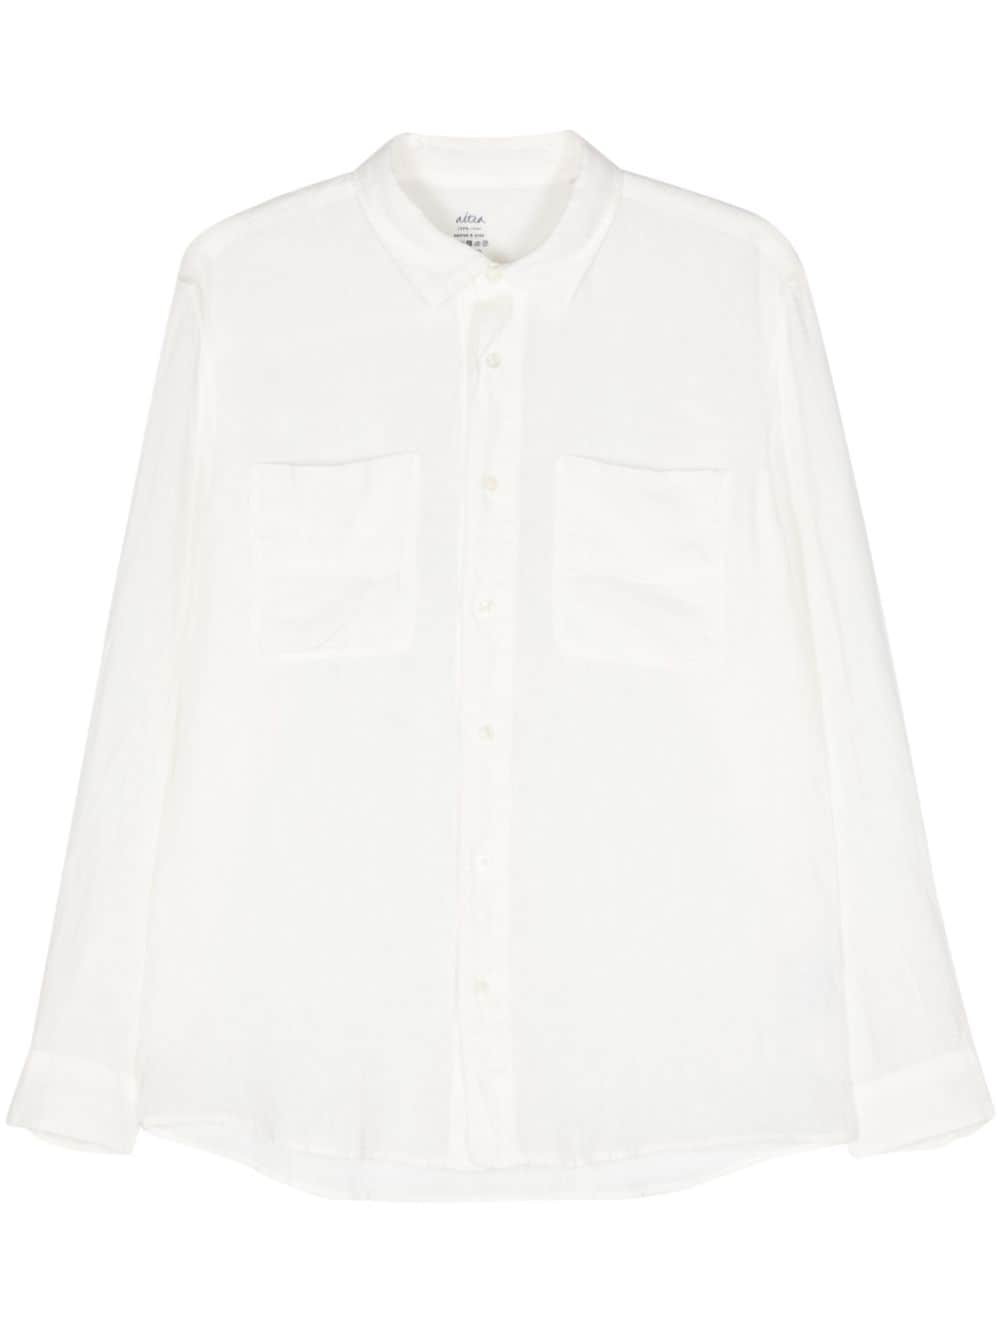 Altea linen chambray shirt - White von Altea